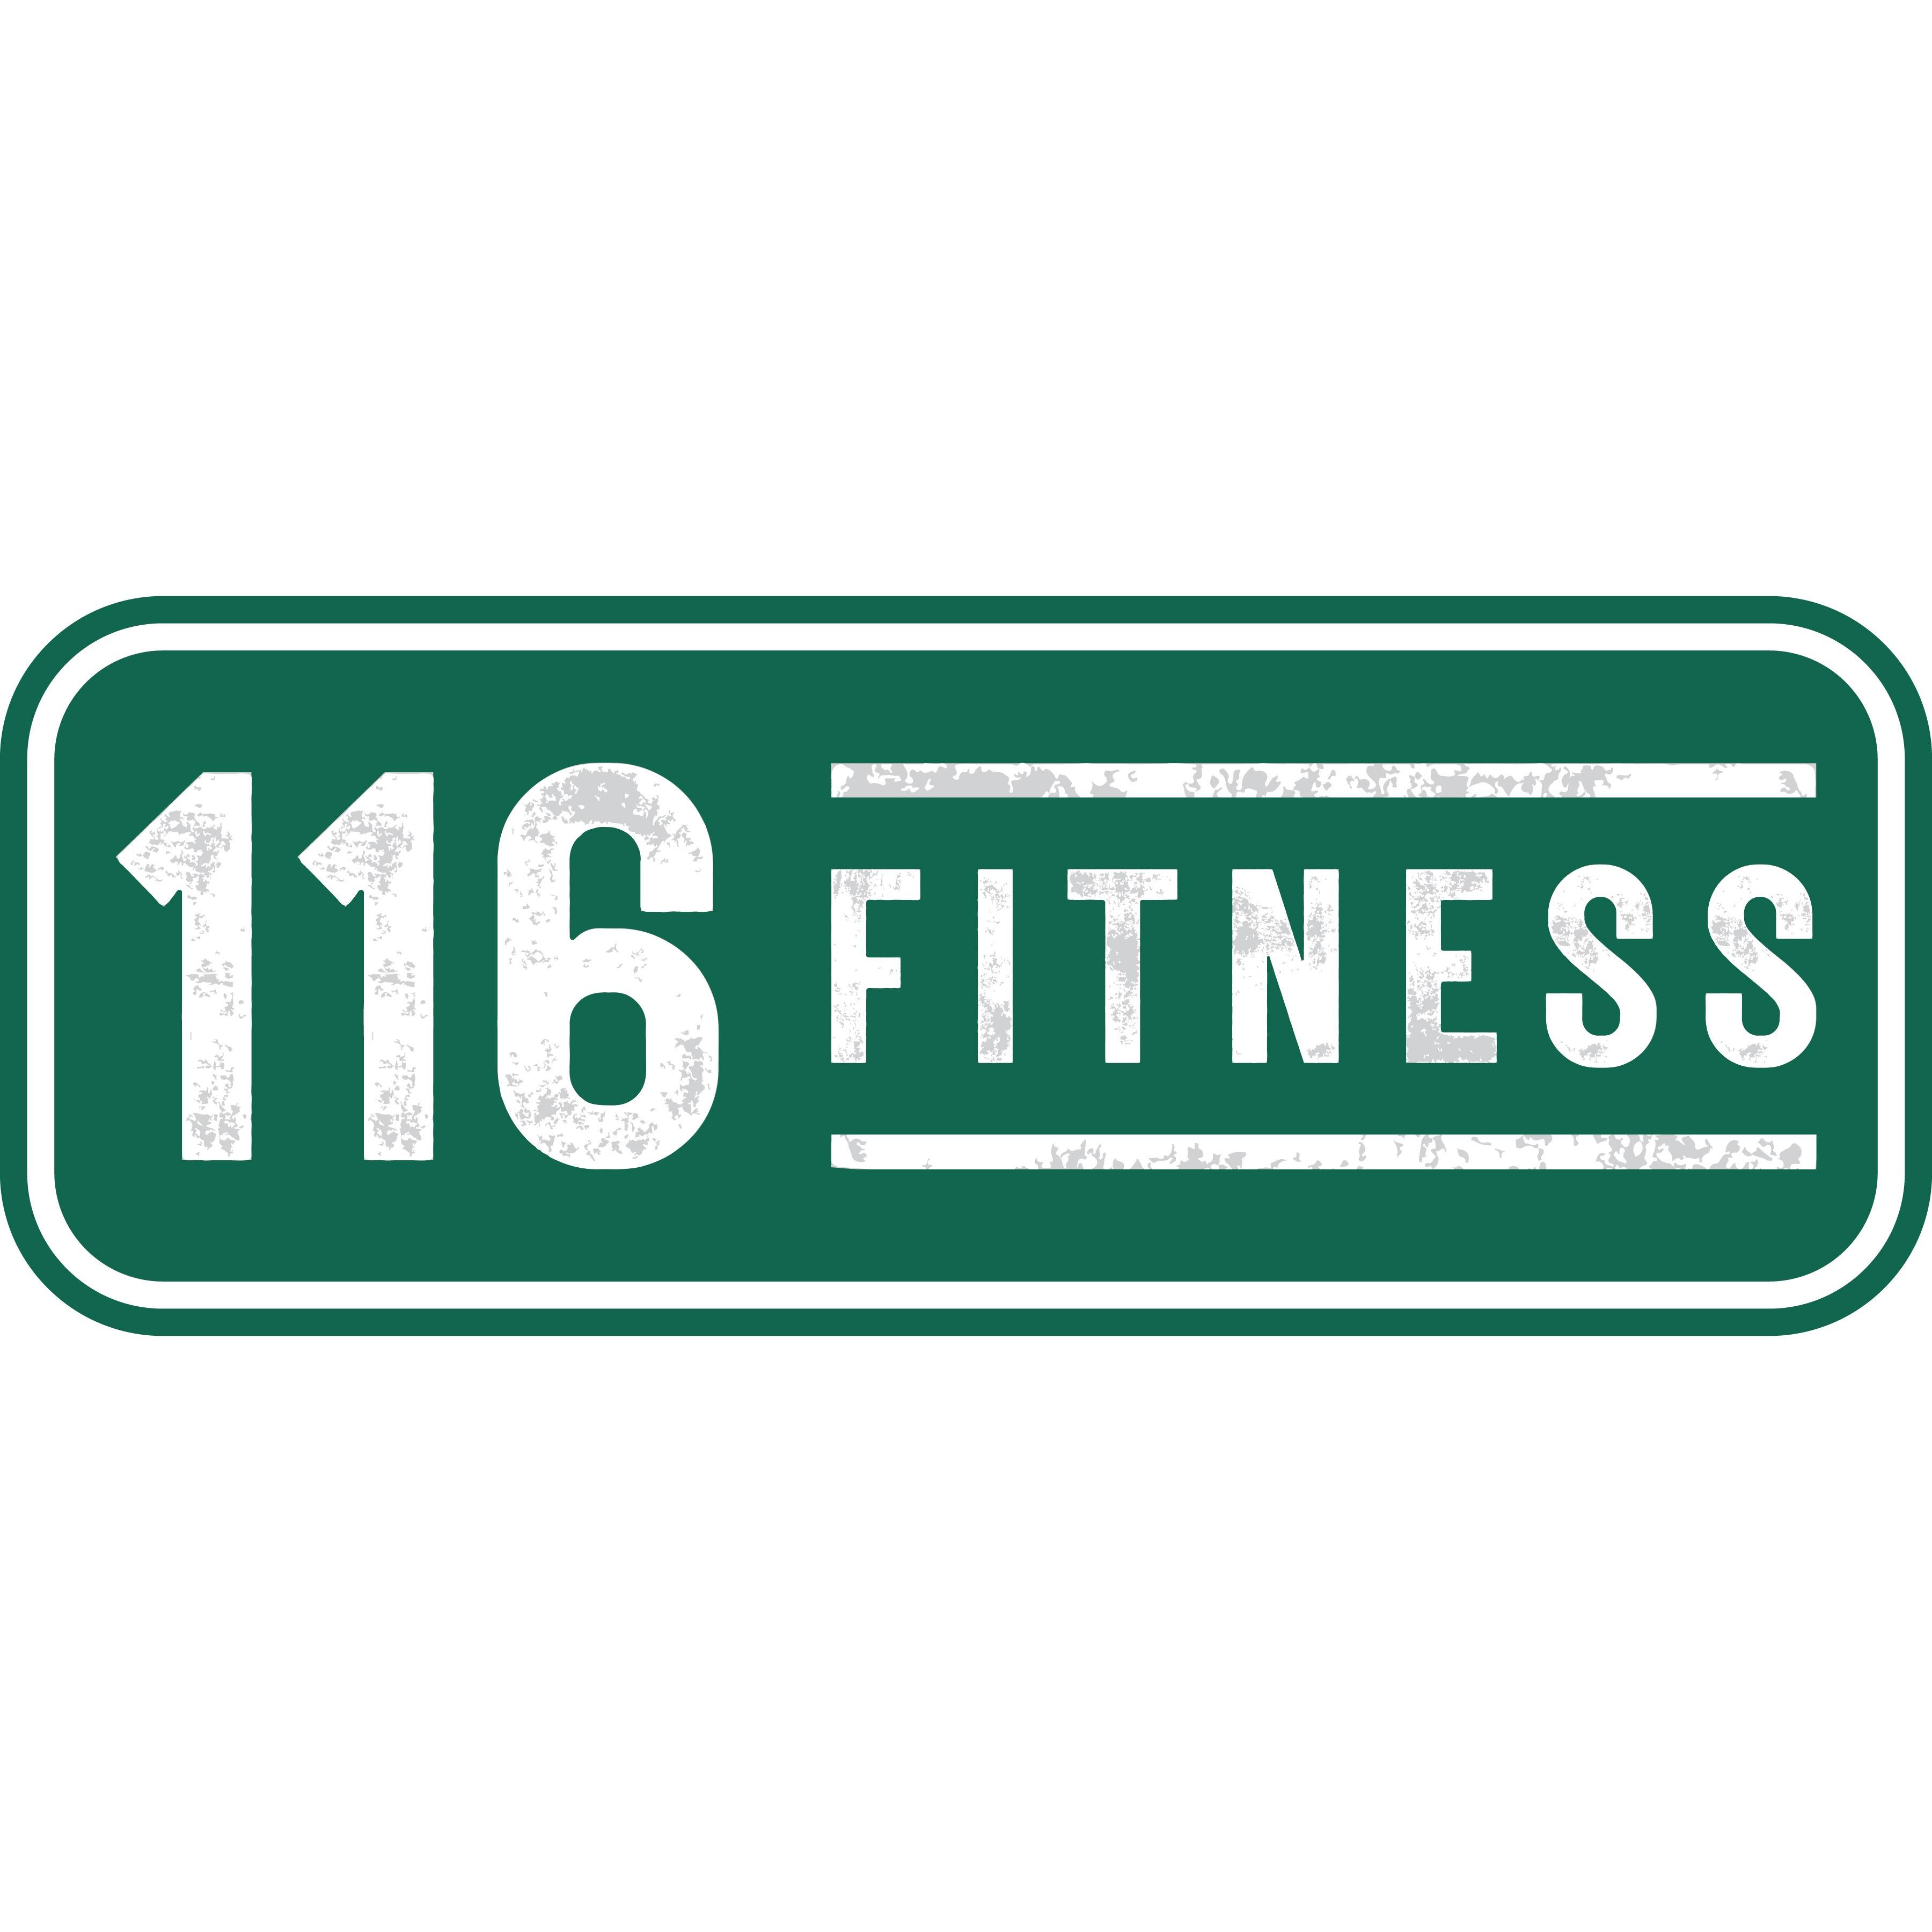 116 Fitness